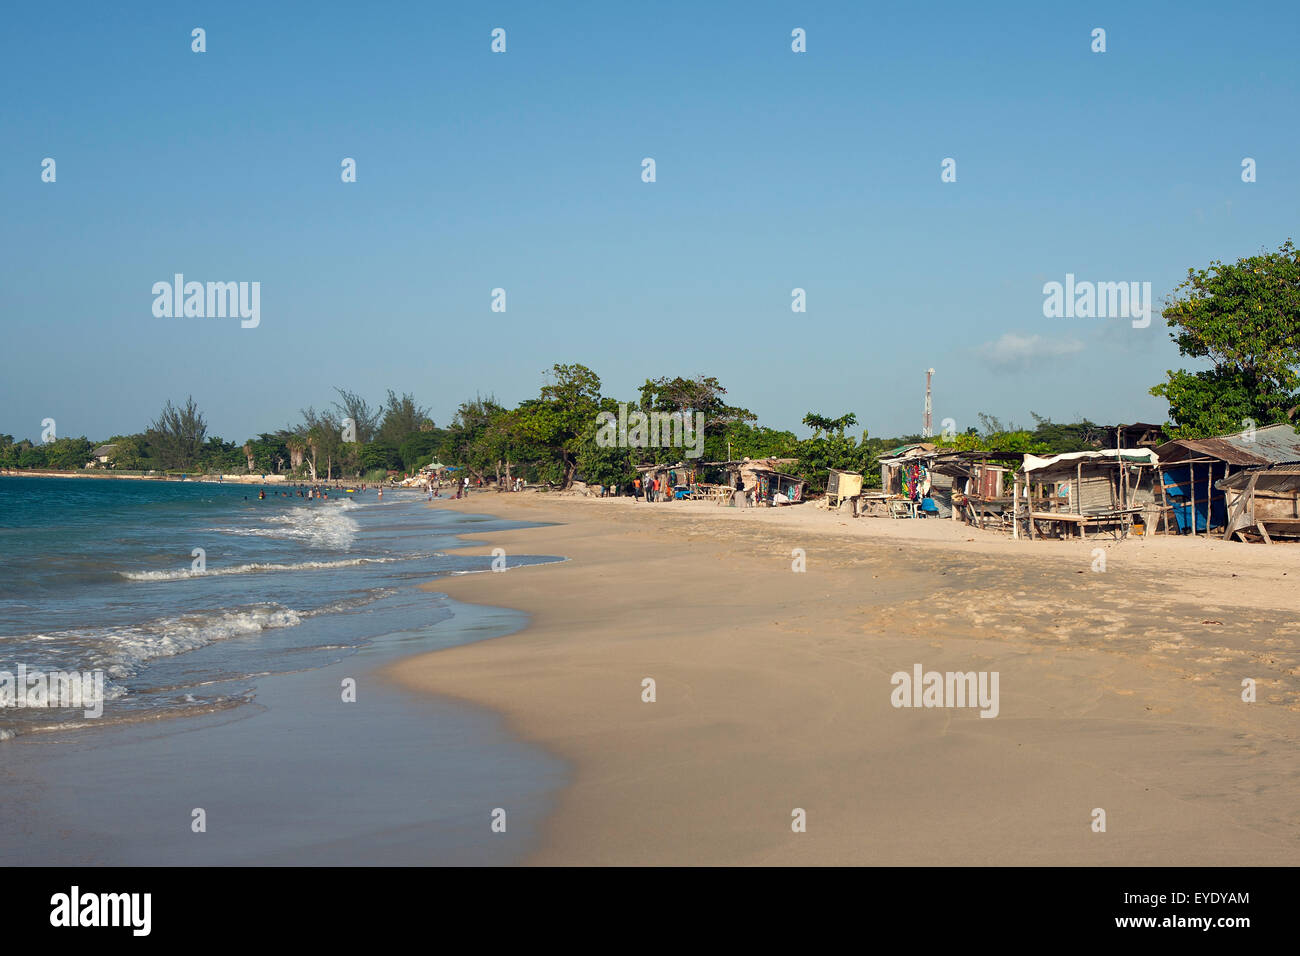 Vendors sell on a beach, Runaway Bay, St. Ann, Jamaica Stock Photo